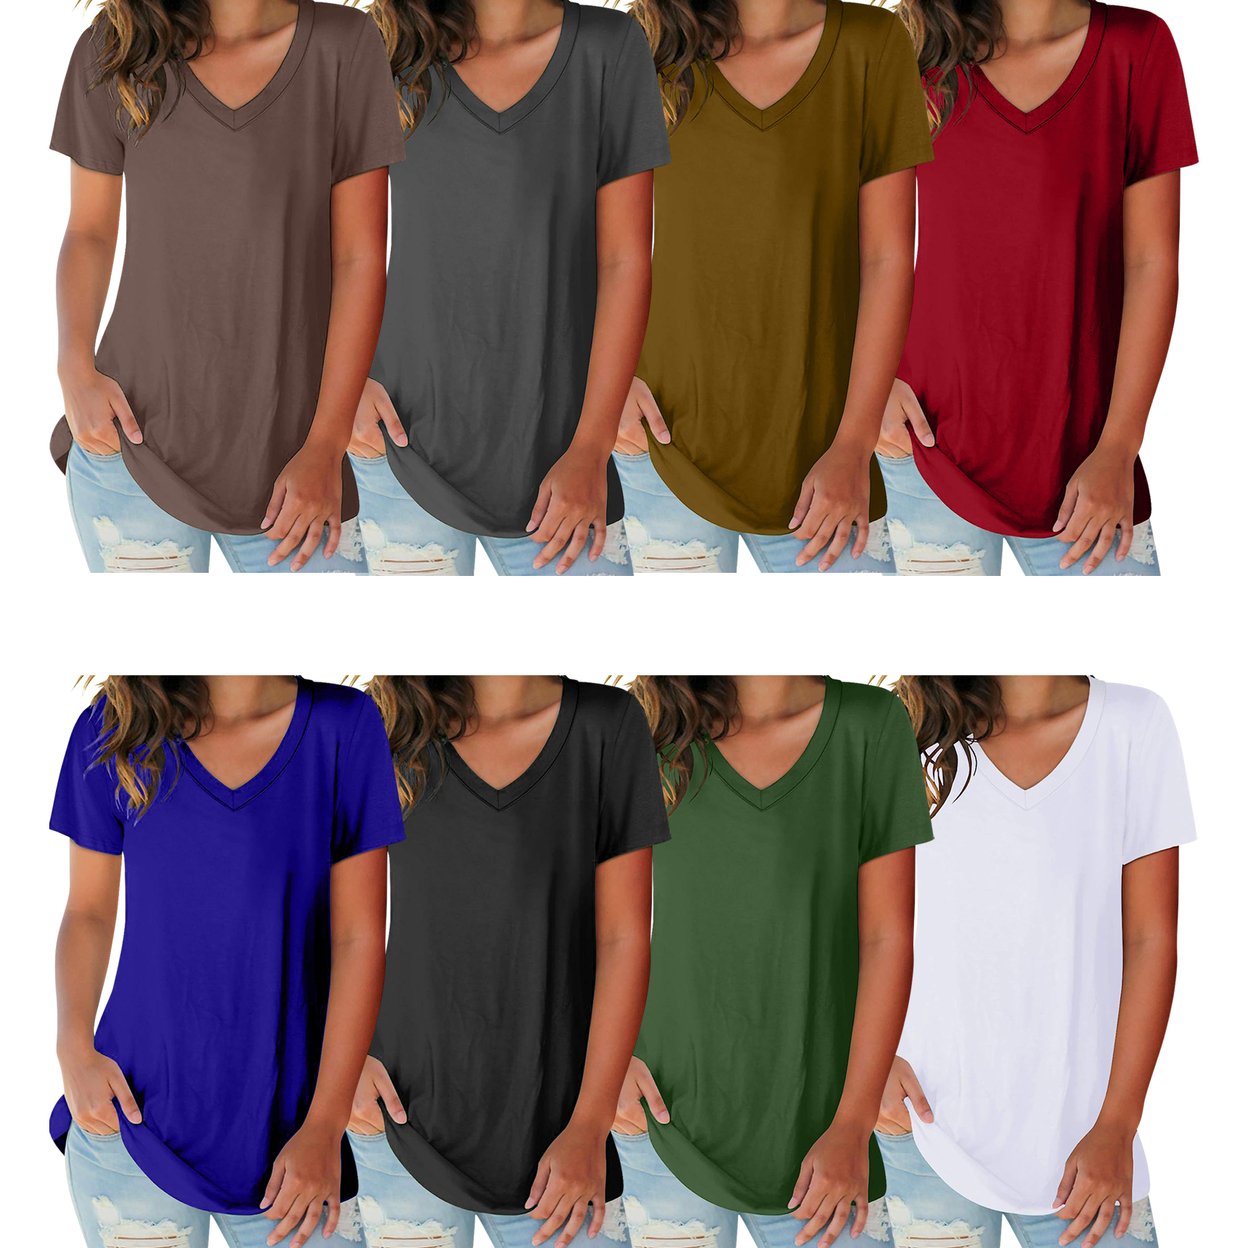 3-Pack: Women's Ultra Soft Smooth Cotton Blend Basic V-Neck Short Sleeve Shirts - Black, Navy, White, Xx-large